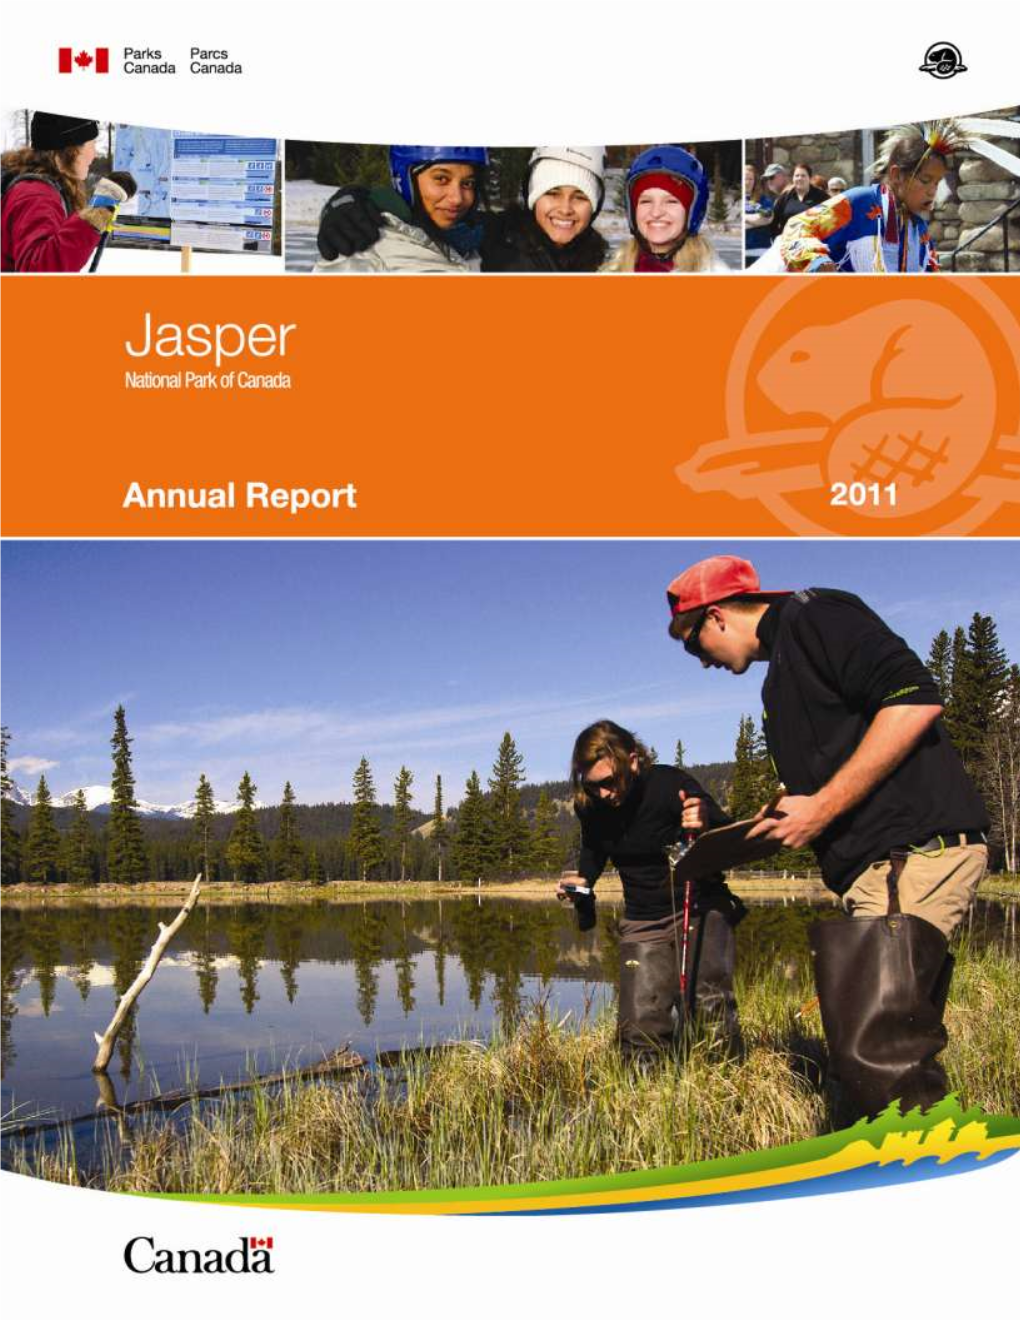 2011 Annual Report - Jasper National Park of Canada 1